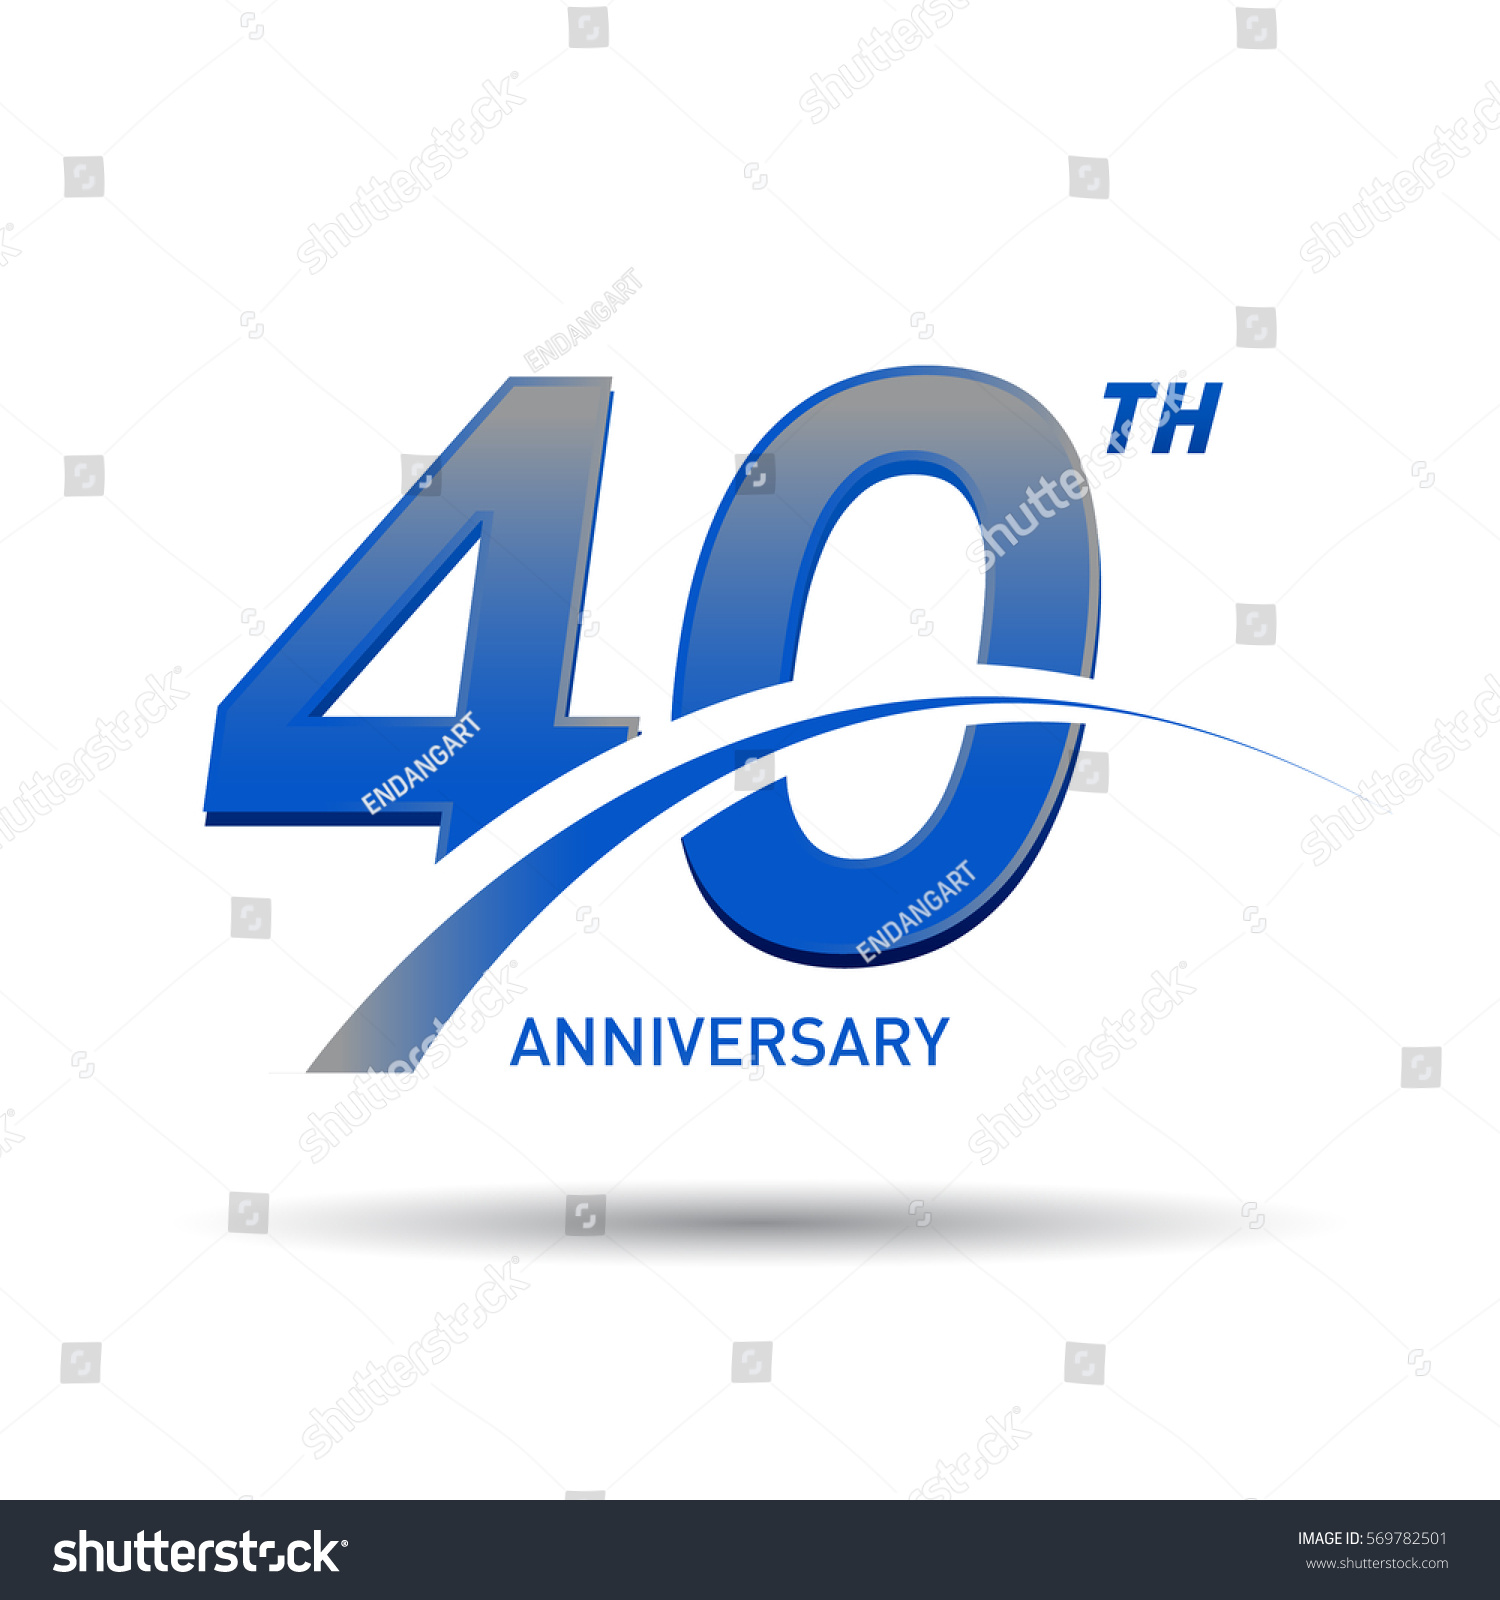 40 Years Anniversary Celebration Design Stock Vector 569782501 ...